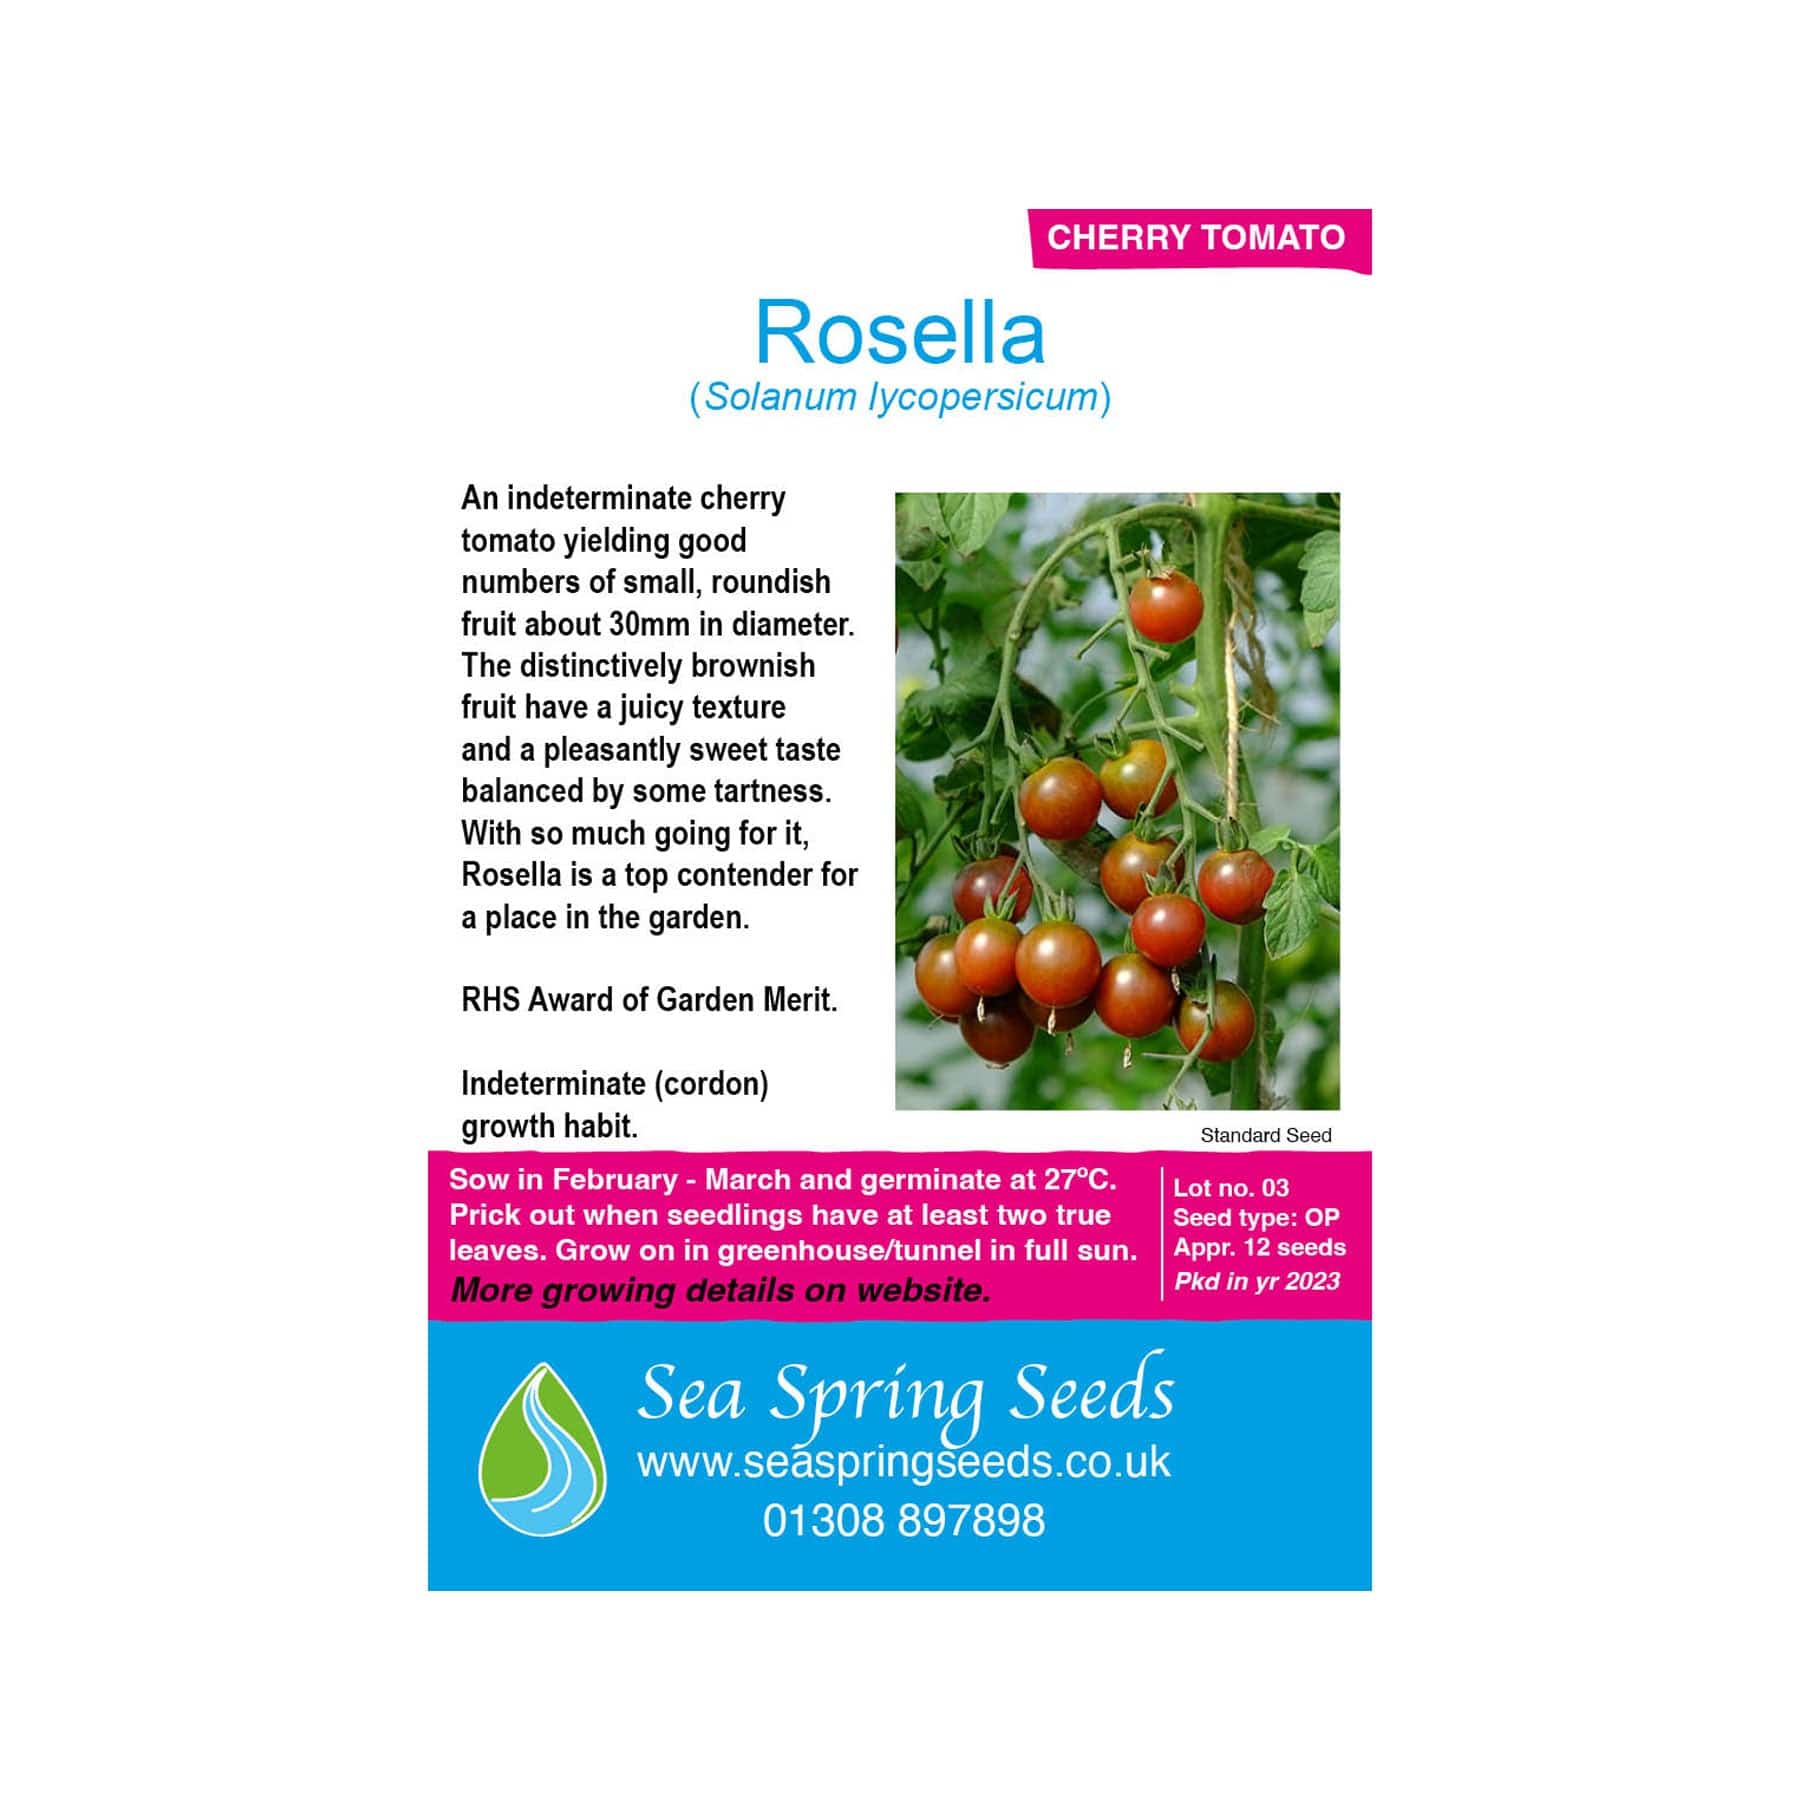 Rosella tomato seeds